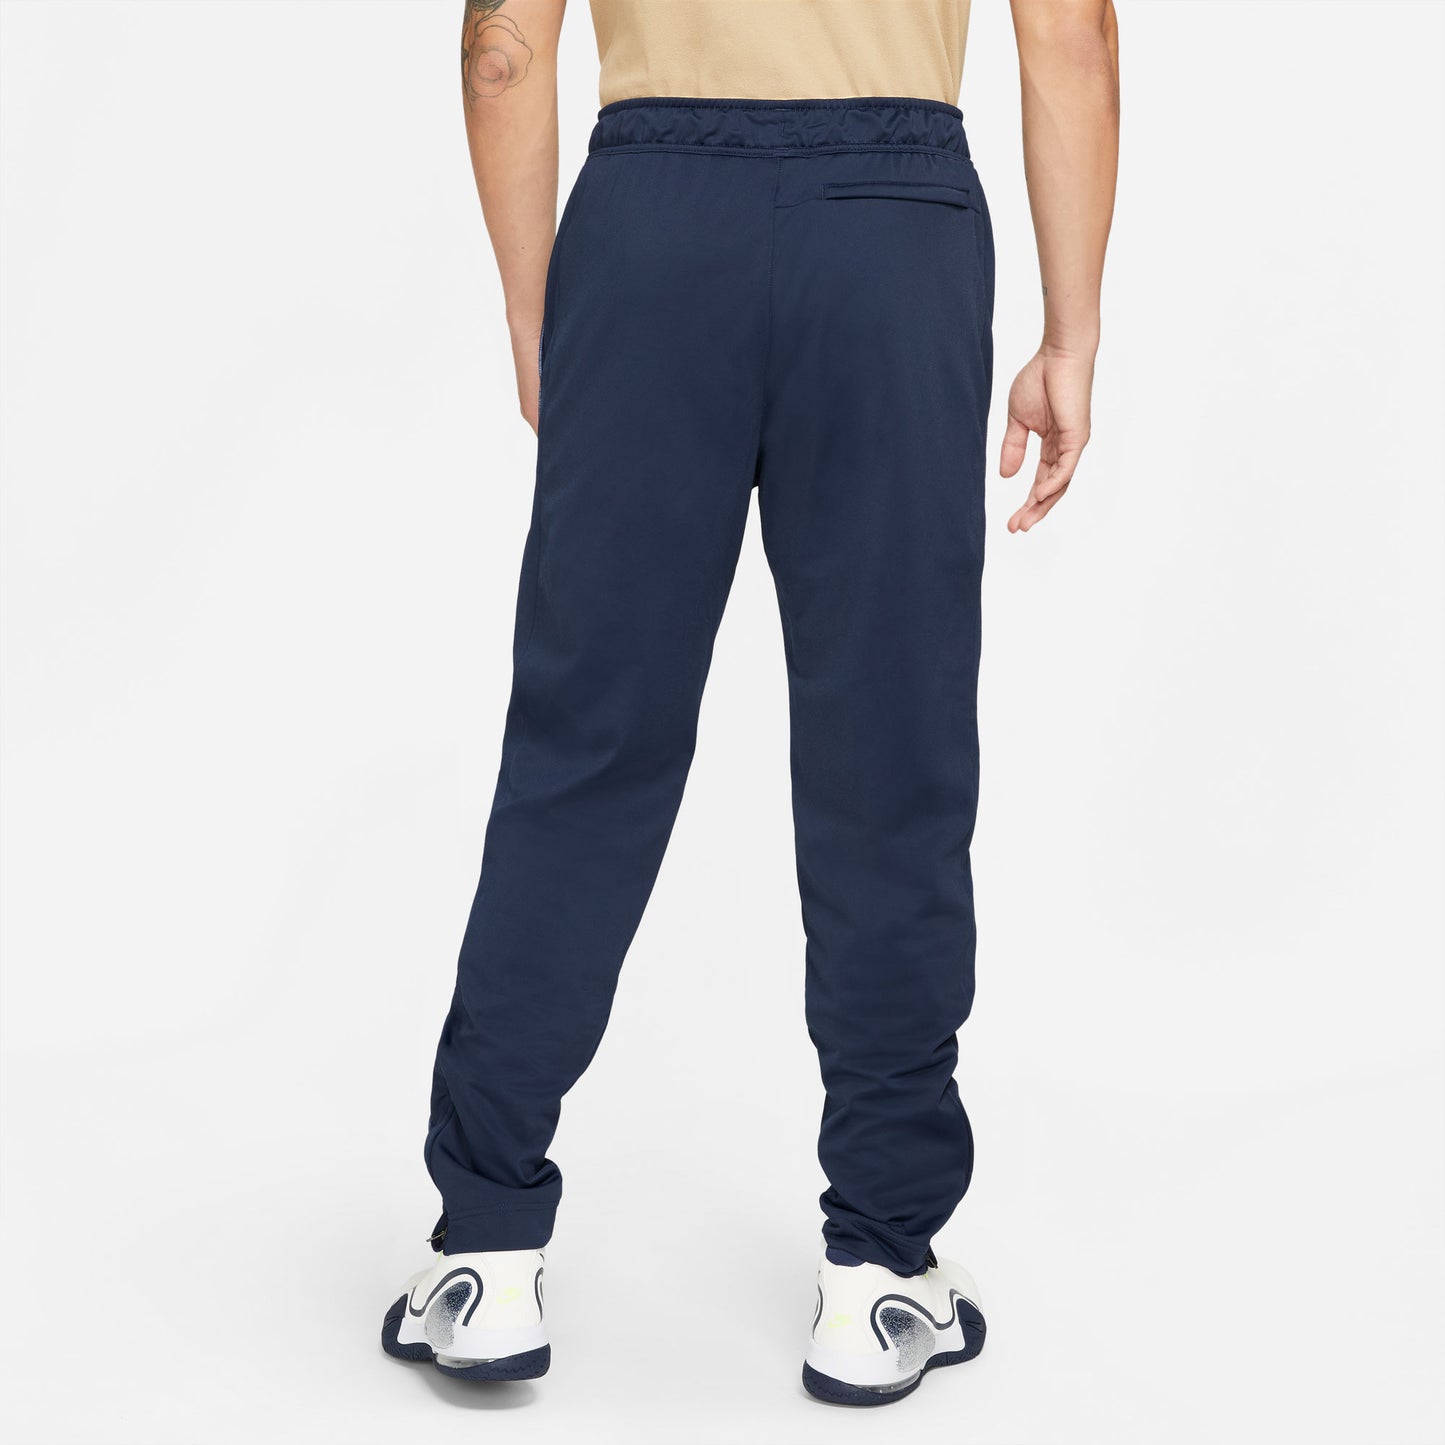 NikeCourt Heritage Men's Tennis Pants Blue (2)